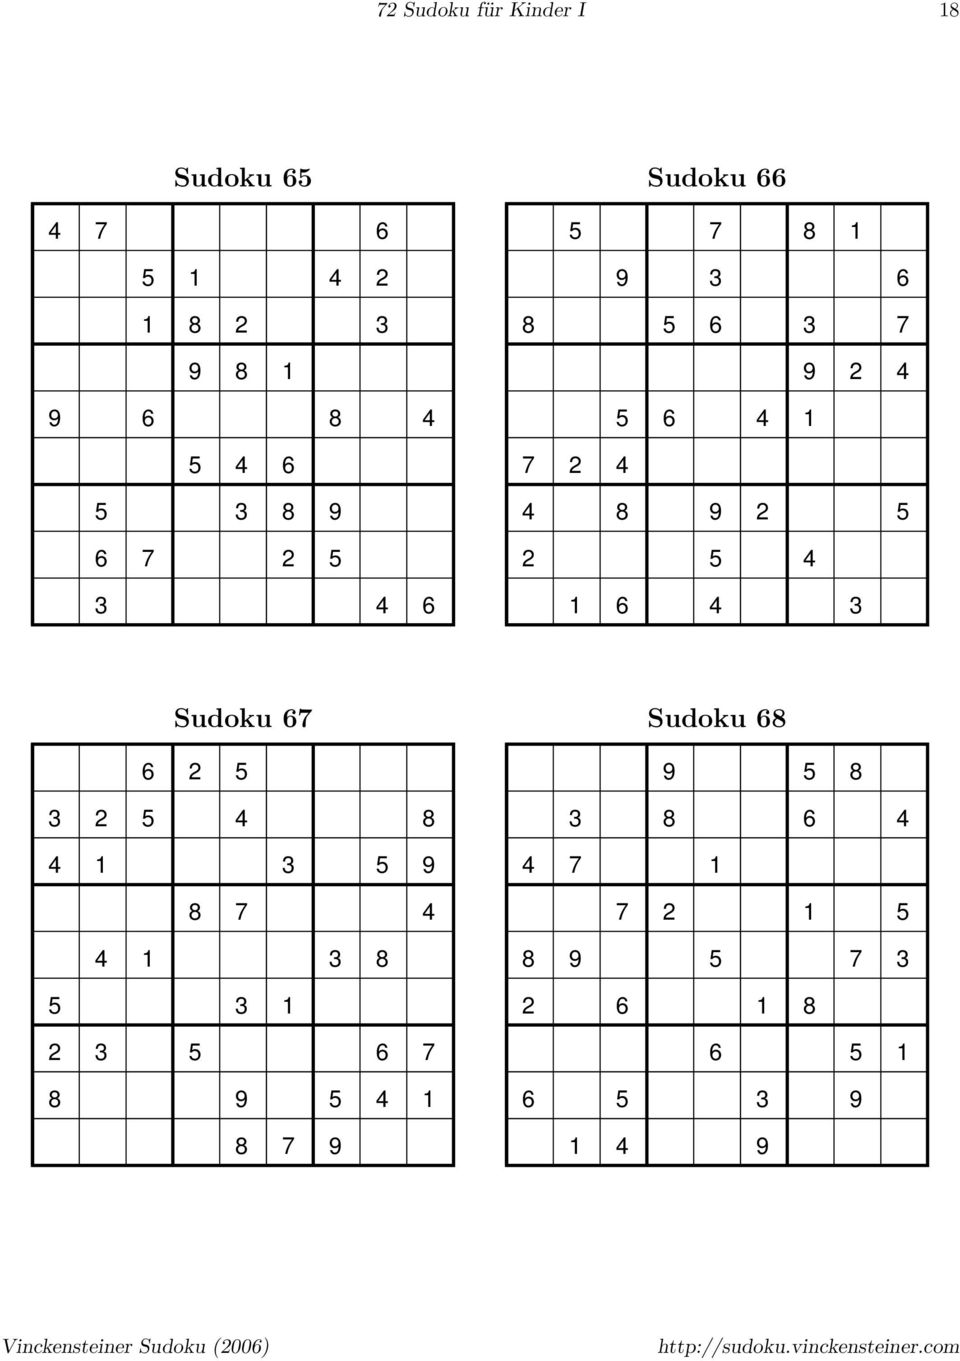 5 5 6 3 Sudoku 67 6 5 3 5 8 3 5 9 8 7 3 8 5 3 3 5 6 7 8 9 5